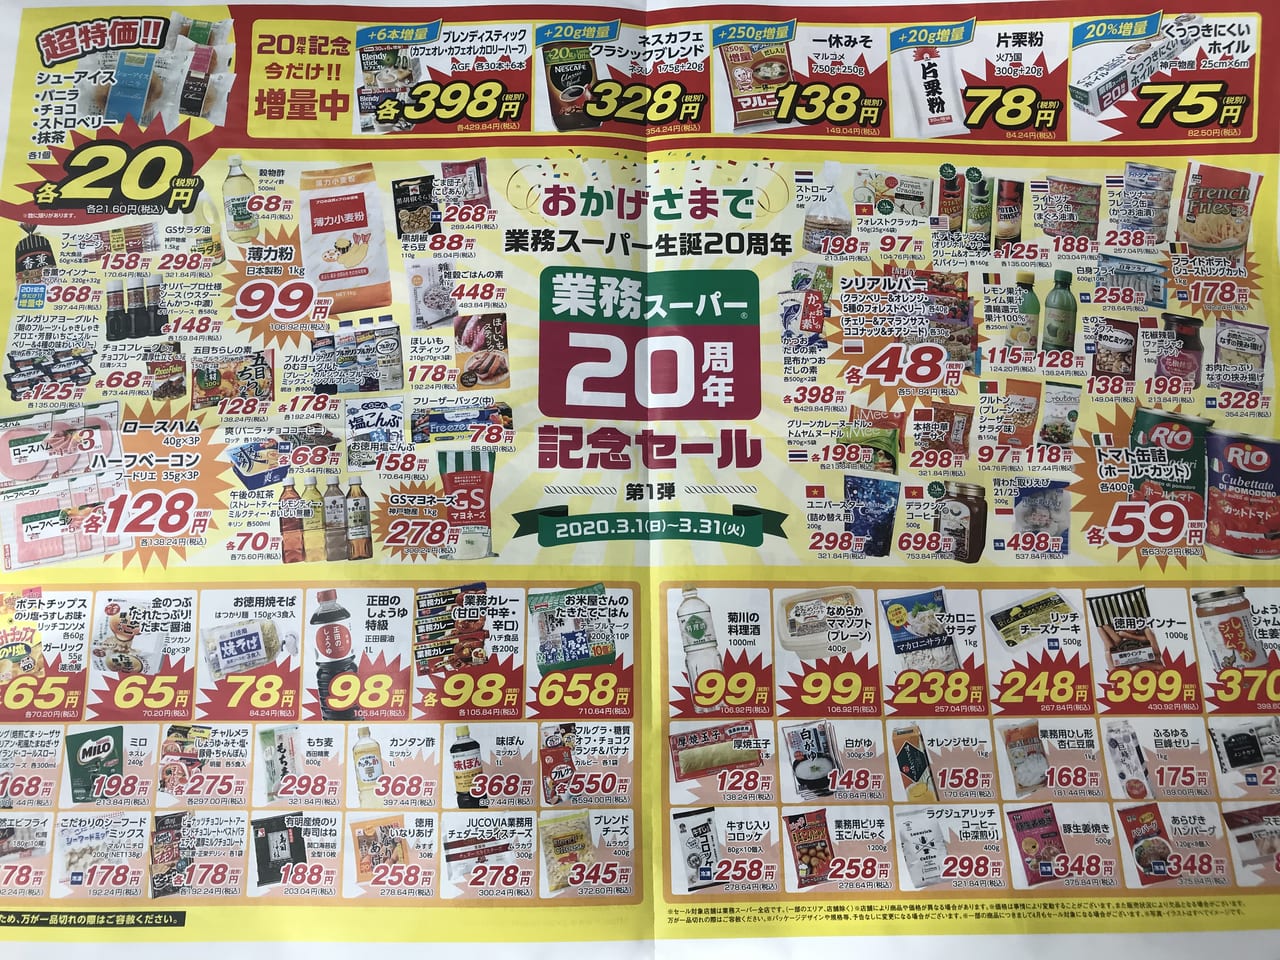 横須賀市 業務スーパーが周年記念セール実施中 号外net 横須賀市